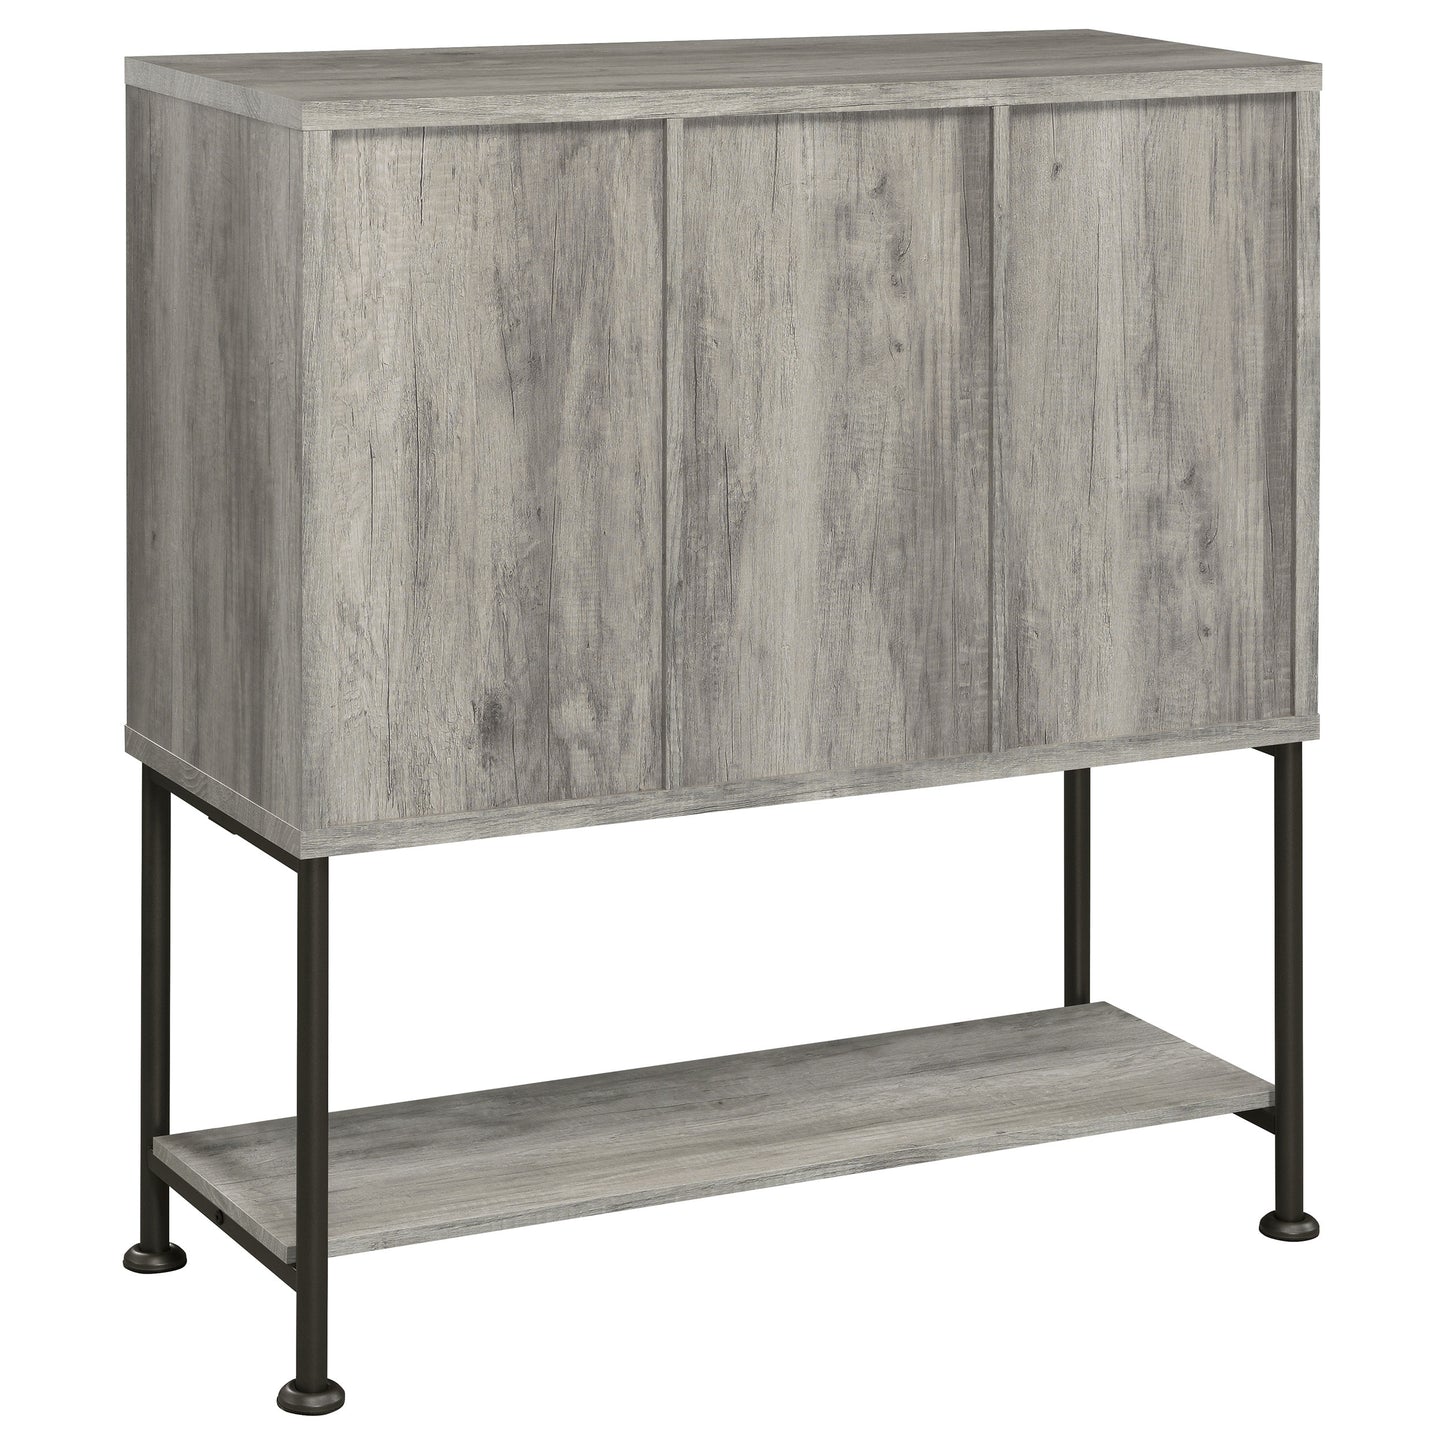 Claremont Sliding Door Bar Cabinet with Lower Shelf Grey Driftwood